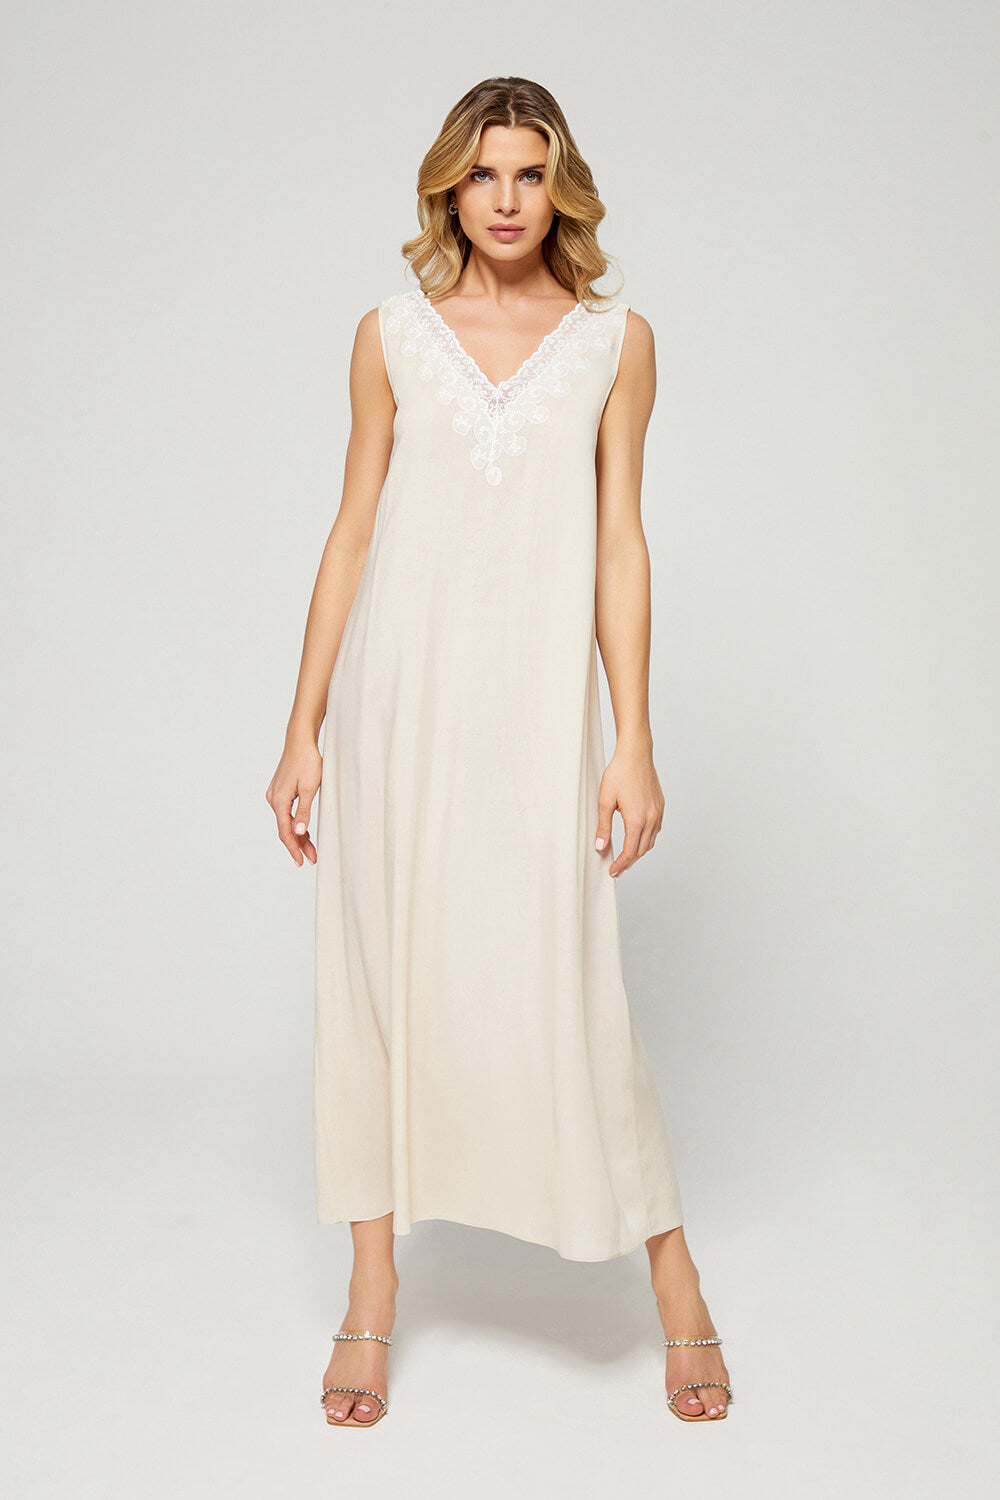 Fleu - Trimmed and Buttoned Silk Chiffon Nightgown - Light Beige